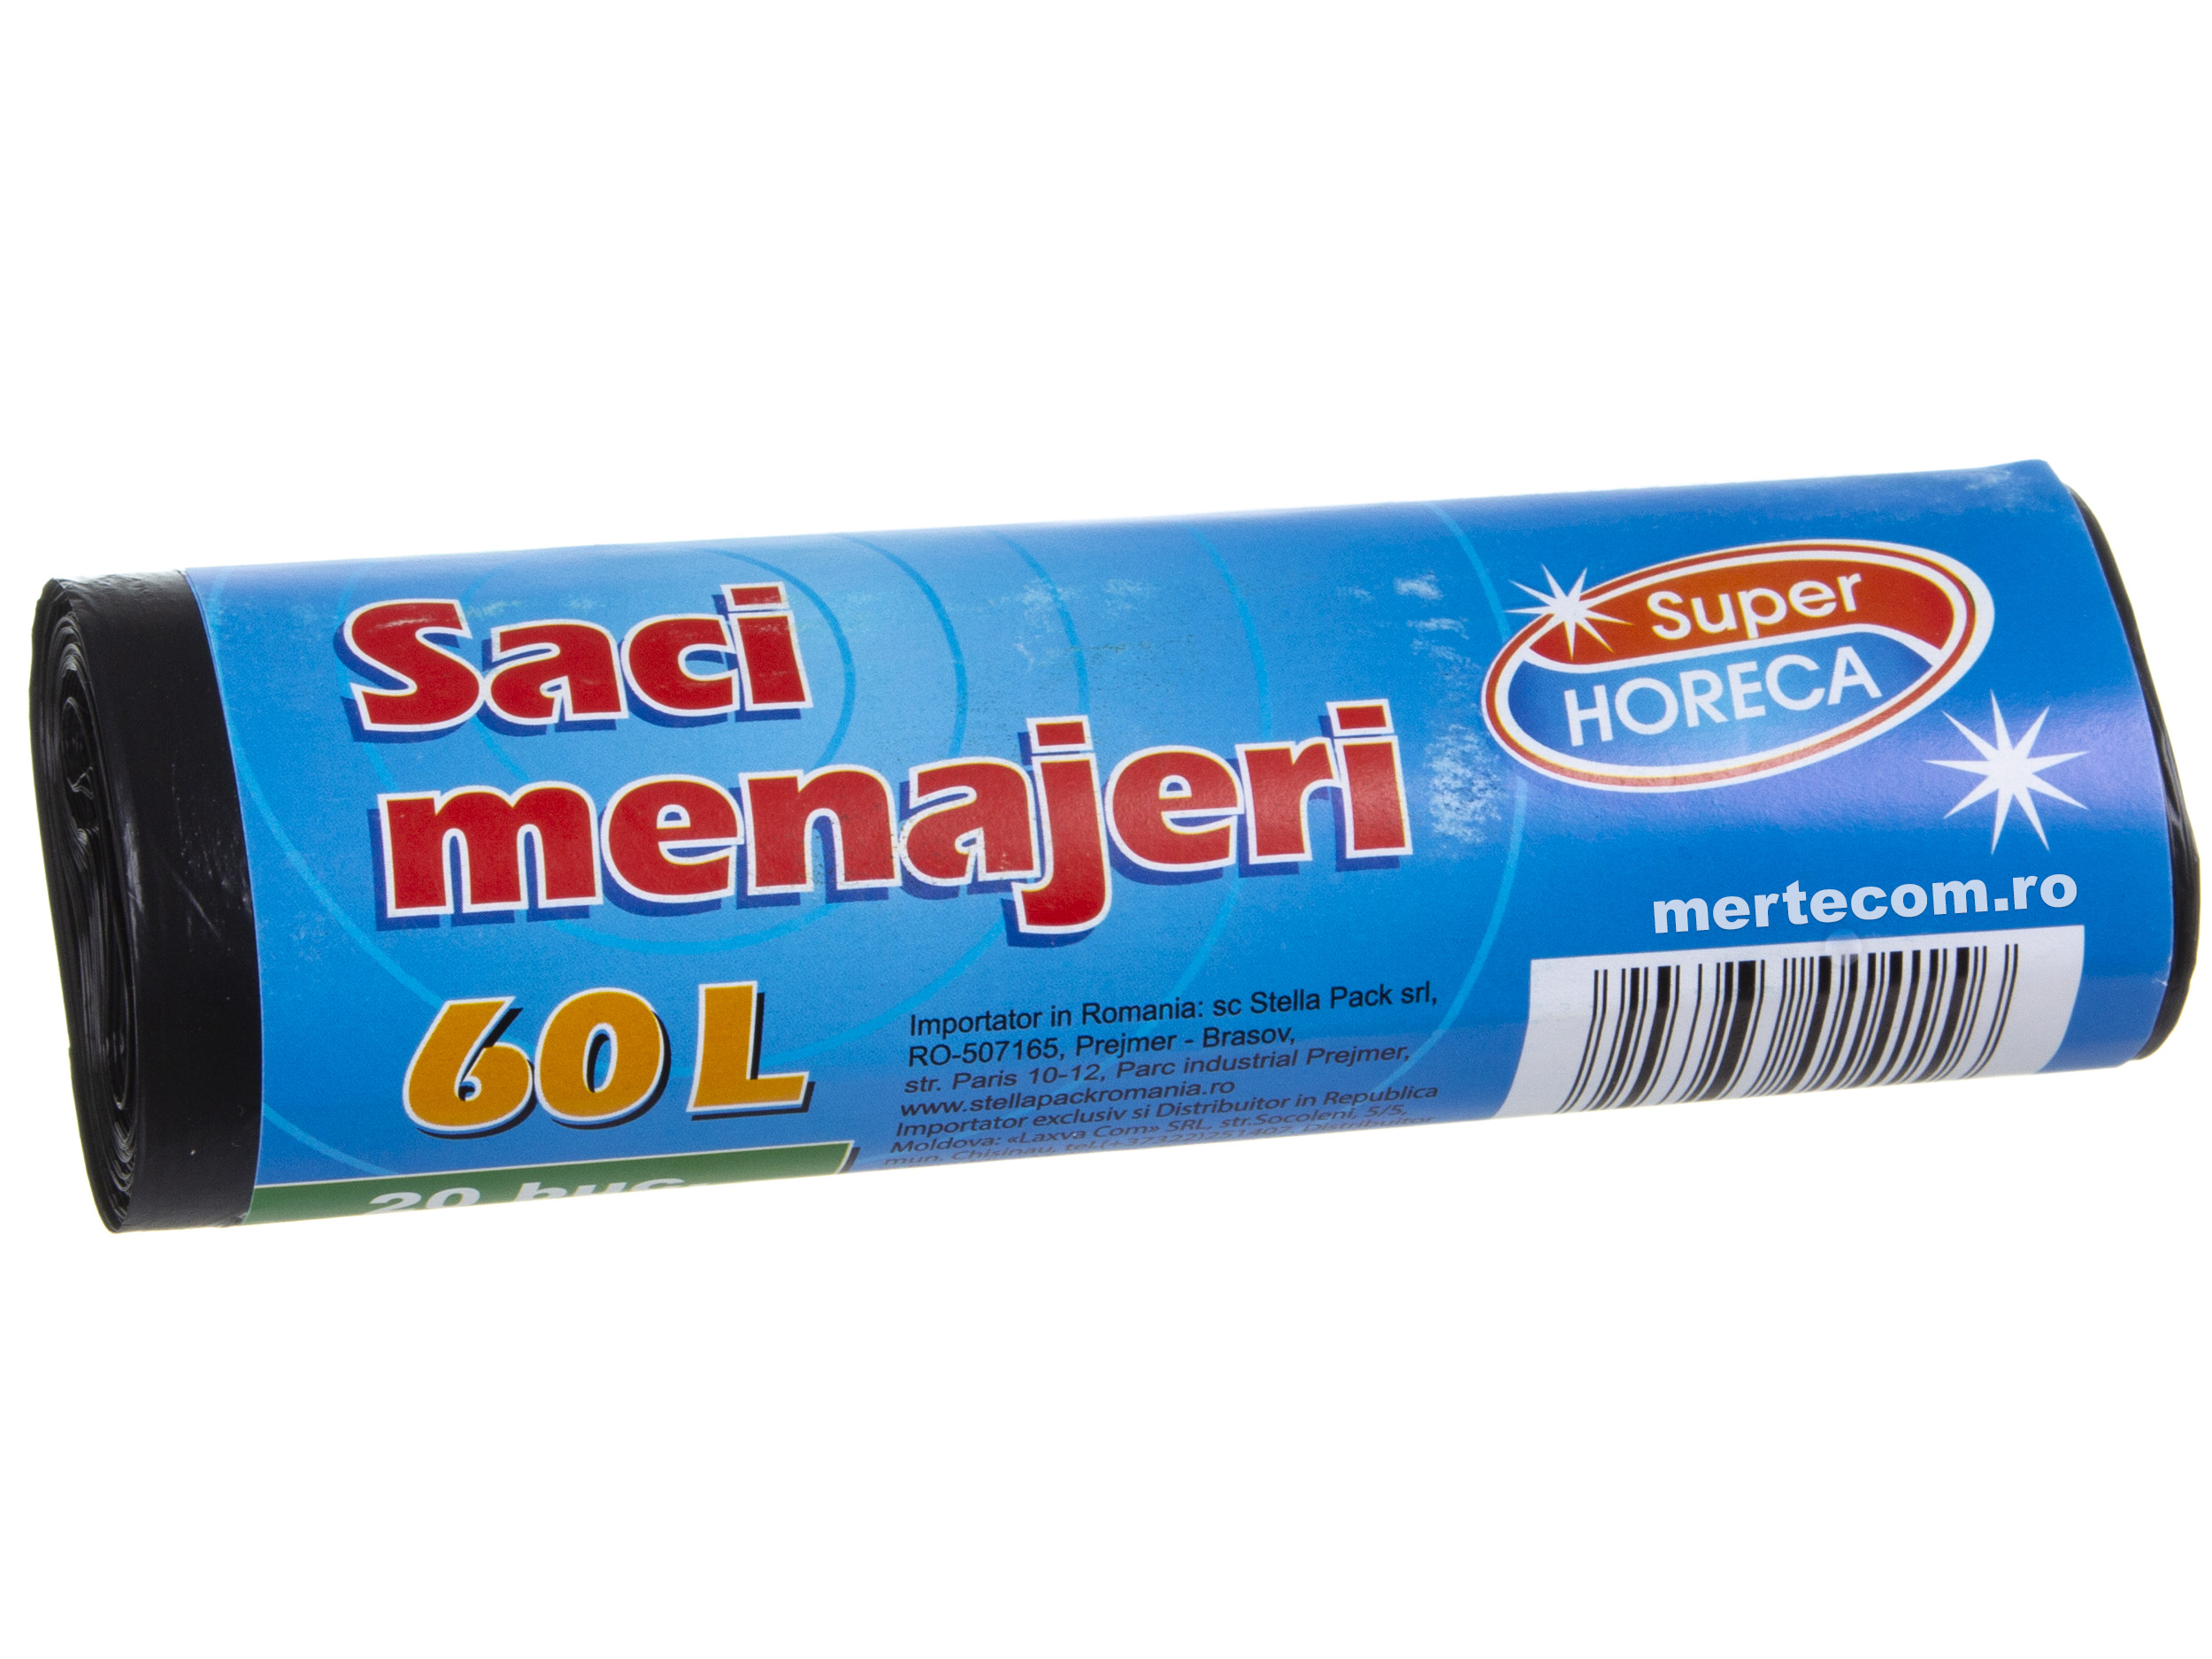 Steer defeat Pew Saci menajeri Eco Super Horeca 60 litri 20 bucati - Mertecom.ro